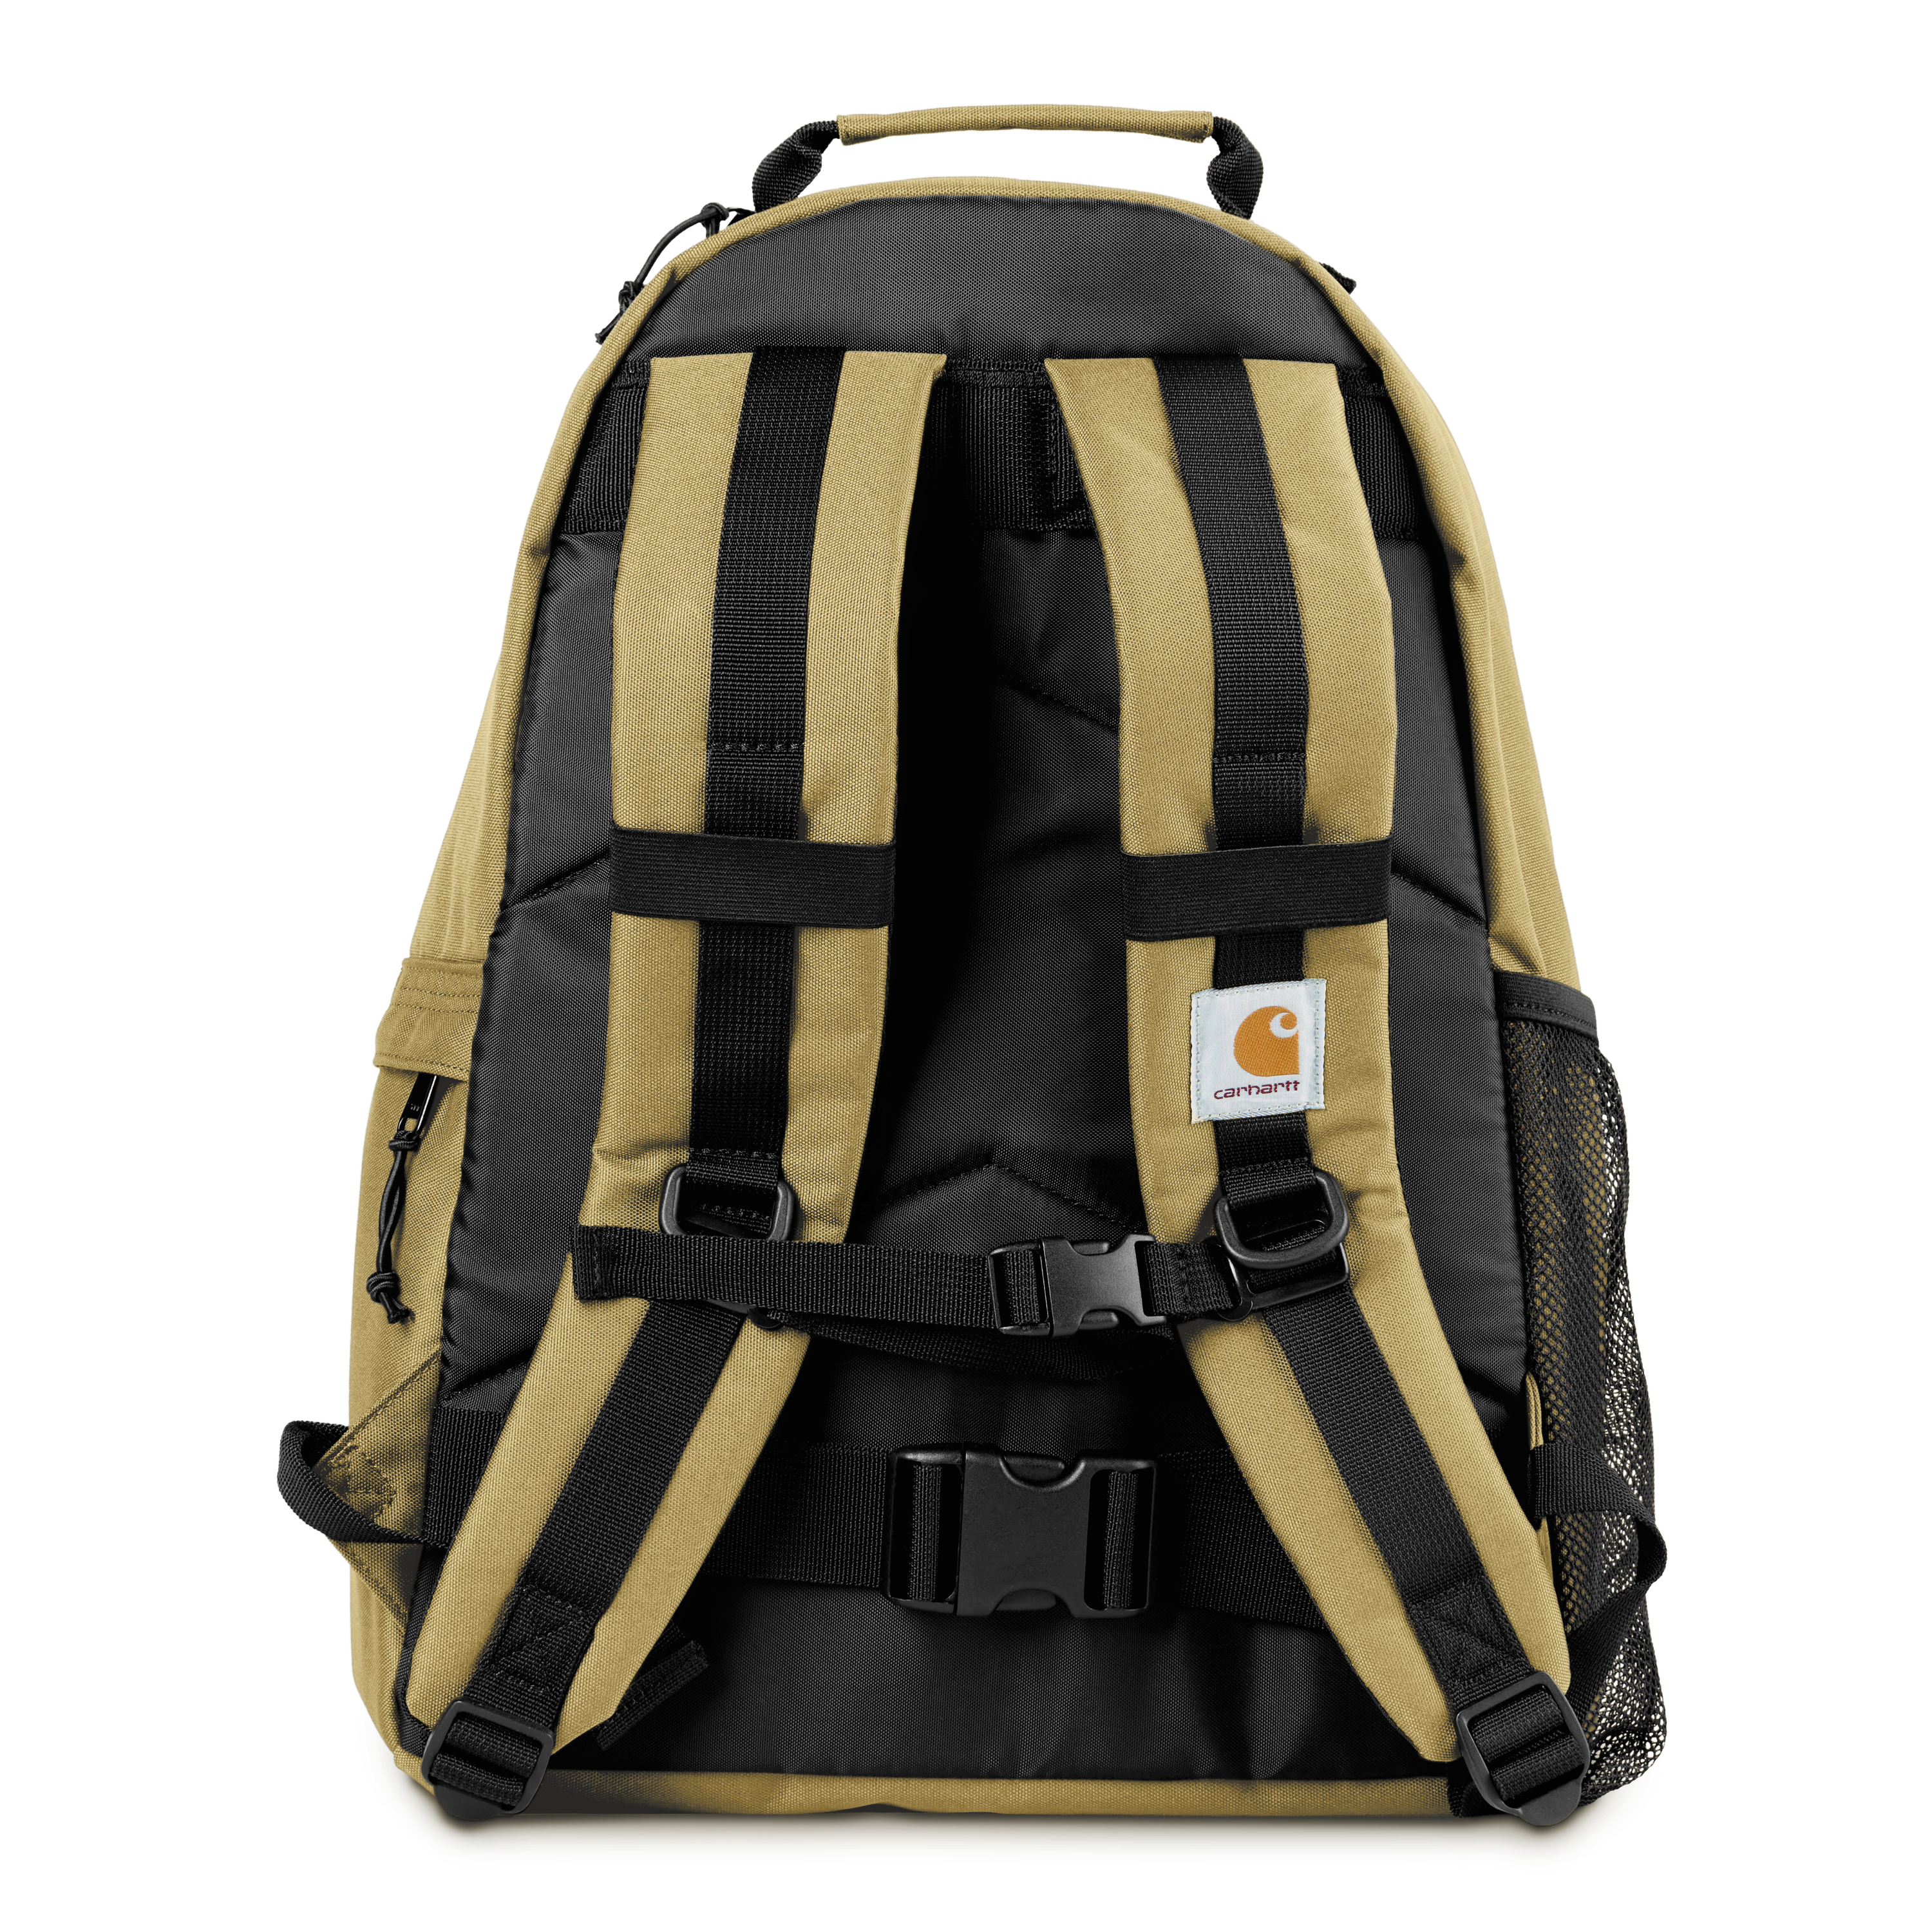 Carhartt WIP Kickflip Backpack, Agate | Official Online Store